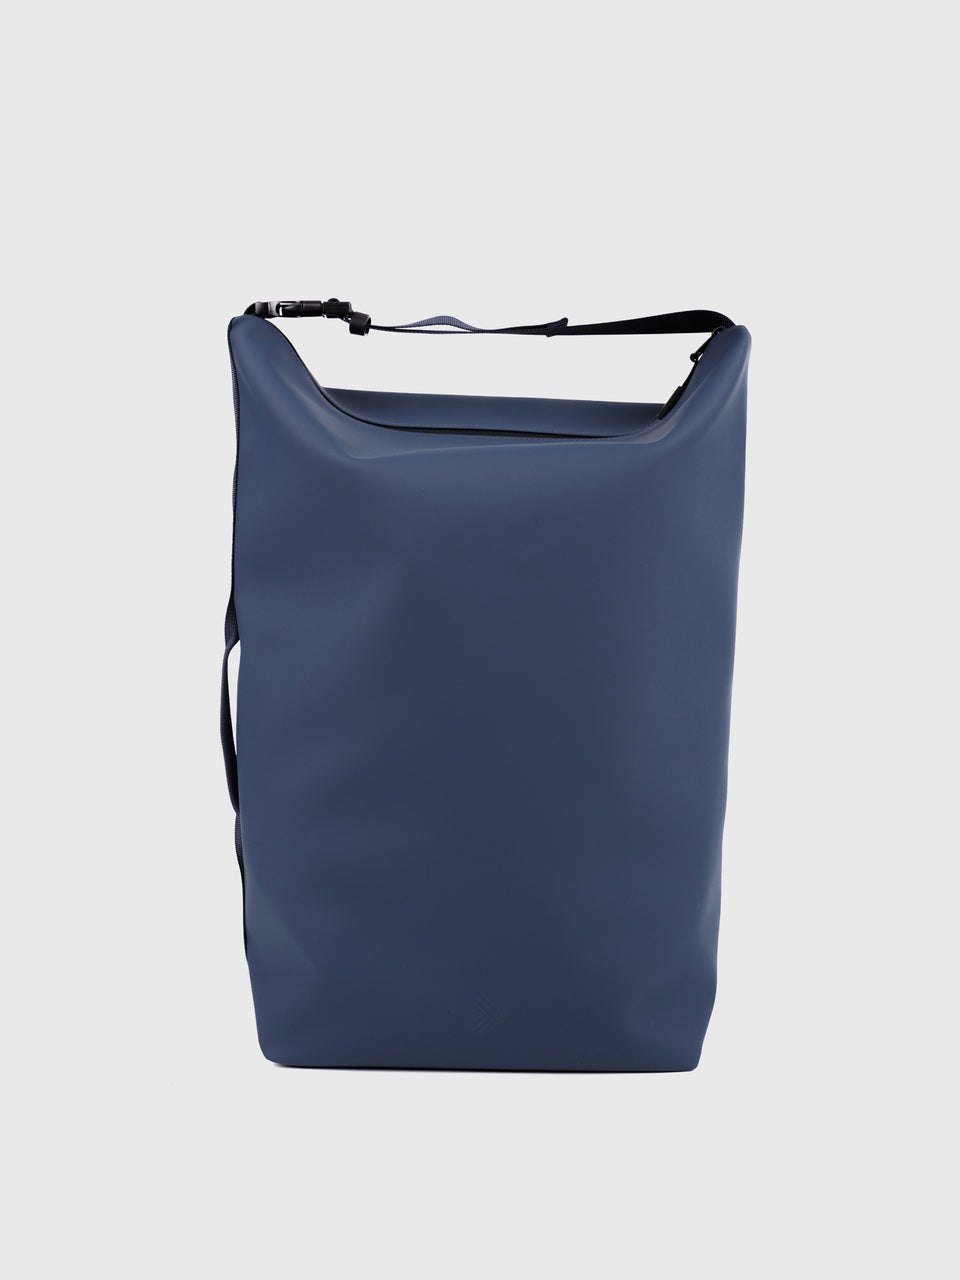 Commuter Backpack - Steel Blue